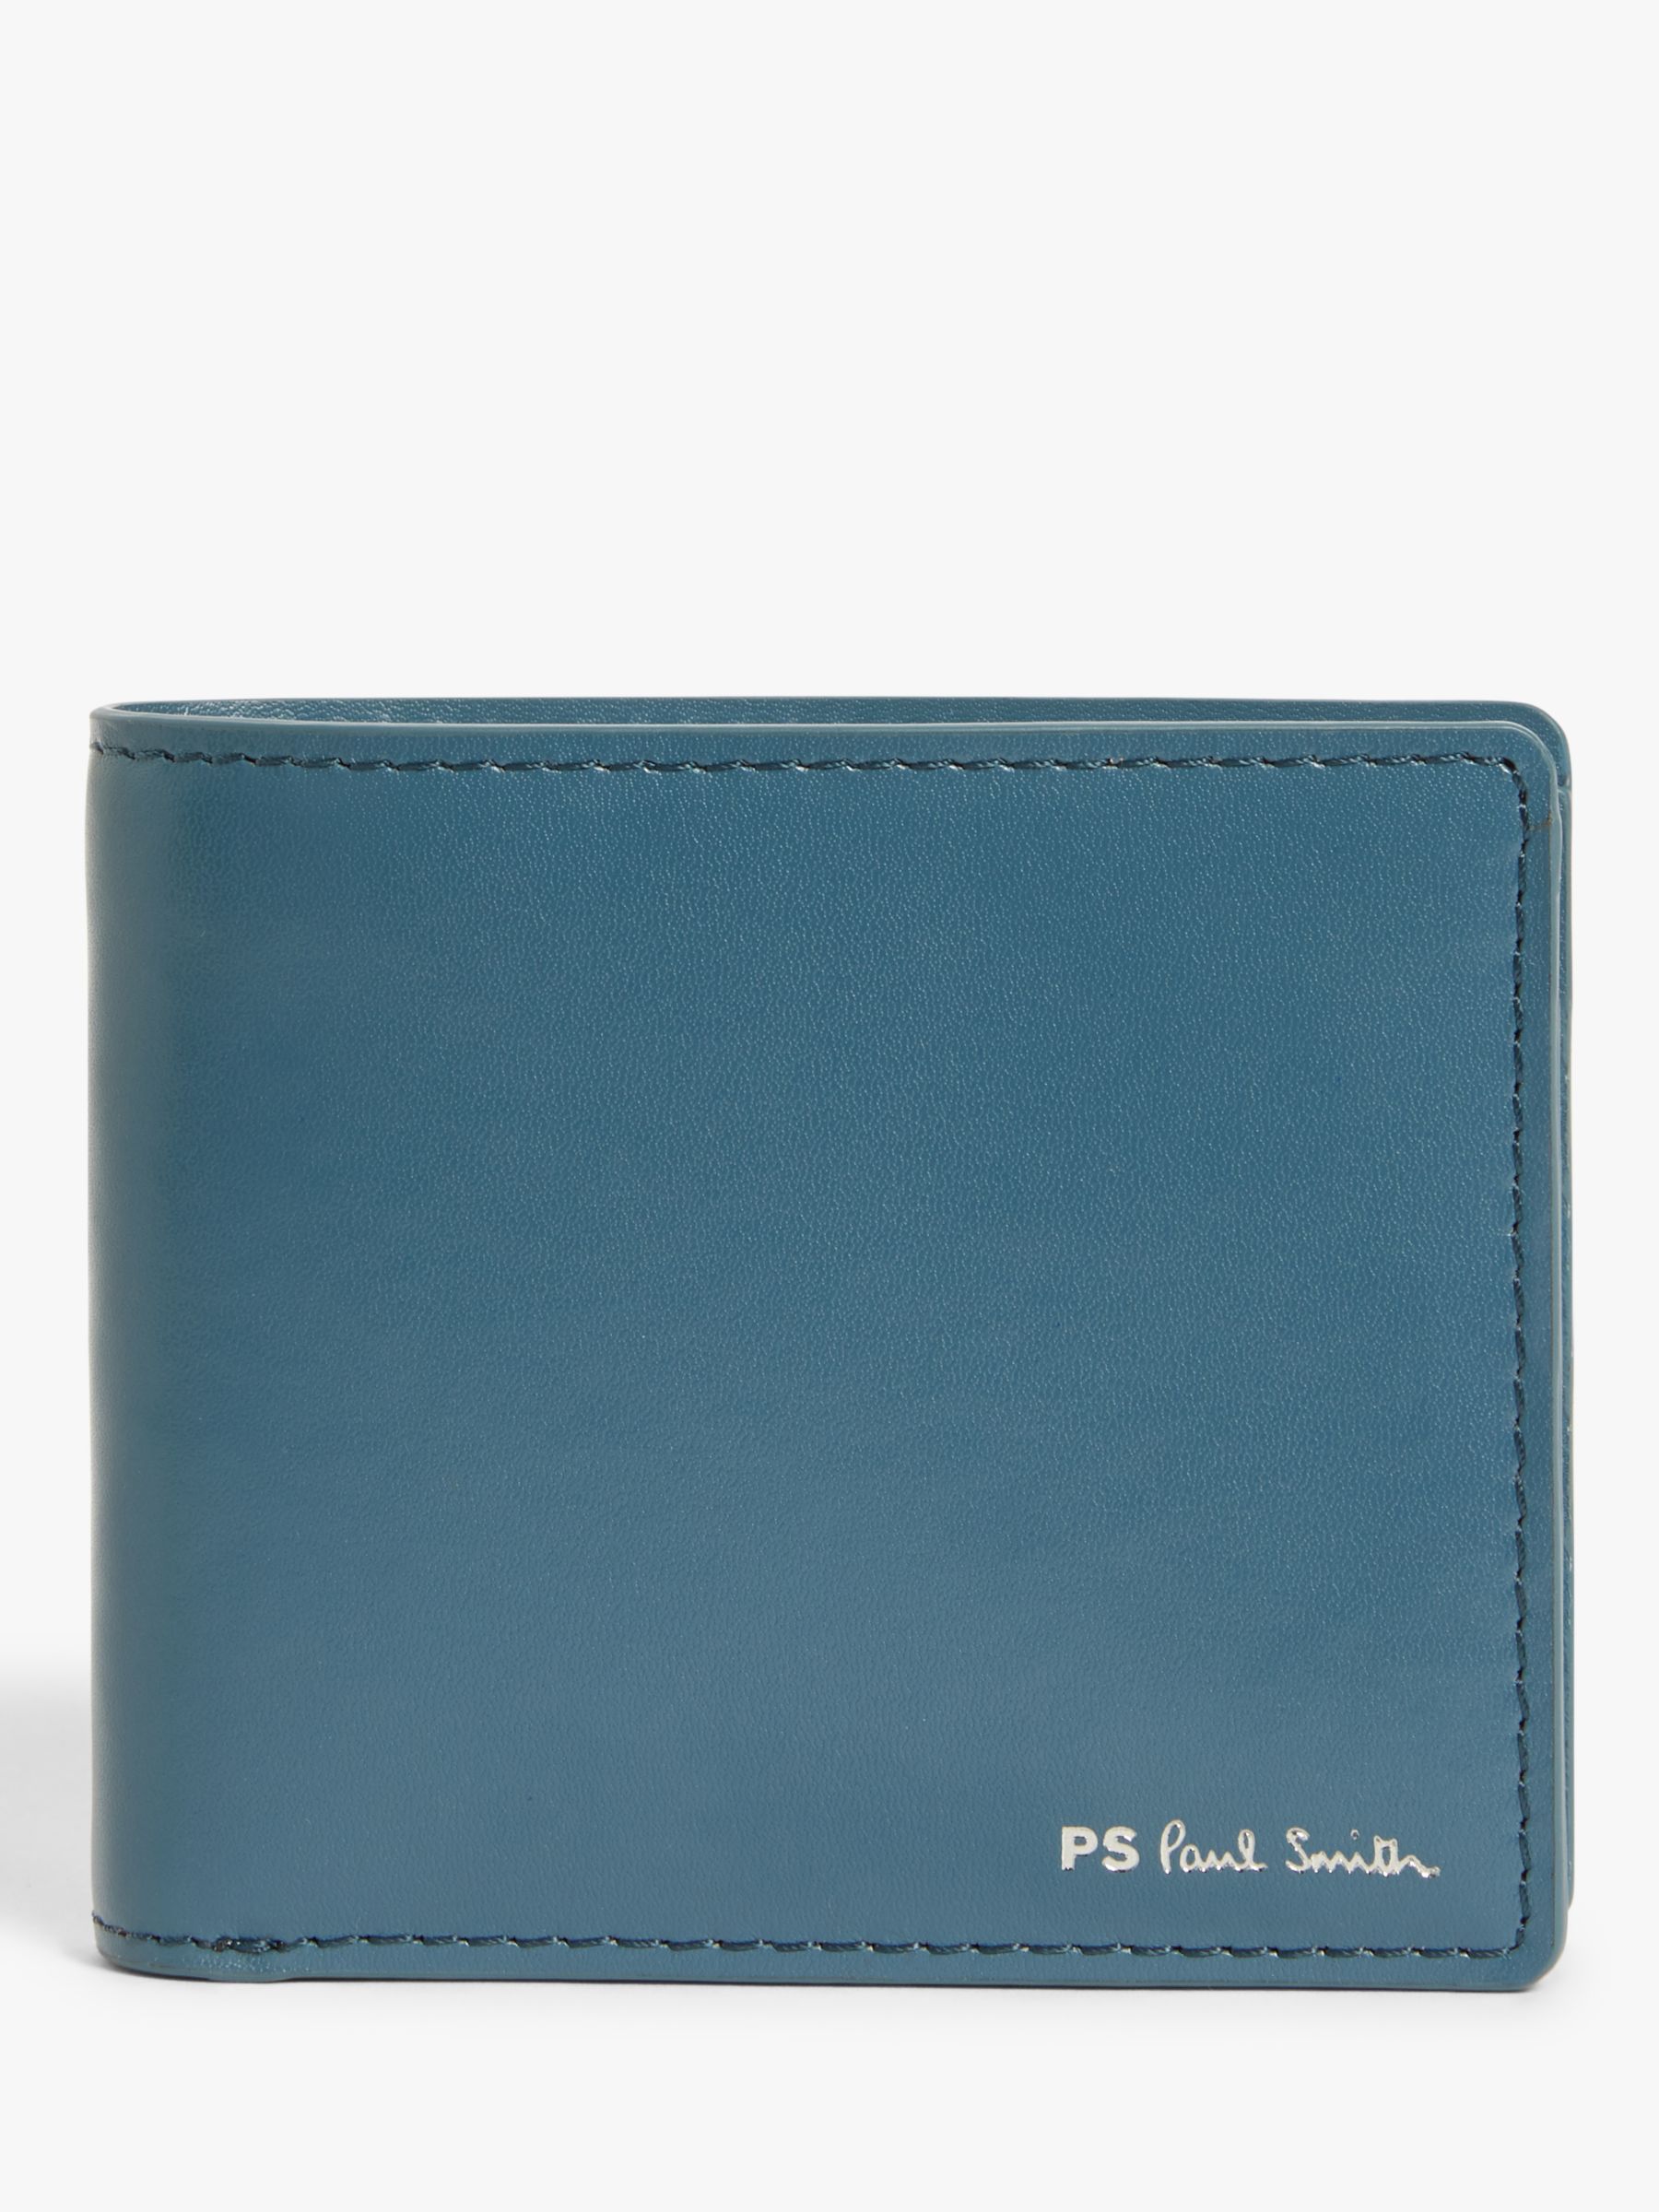 Paul Smith Leather Bifold Wallet, Slate Blue